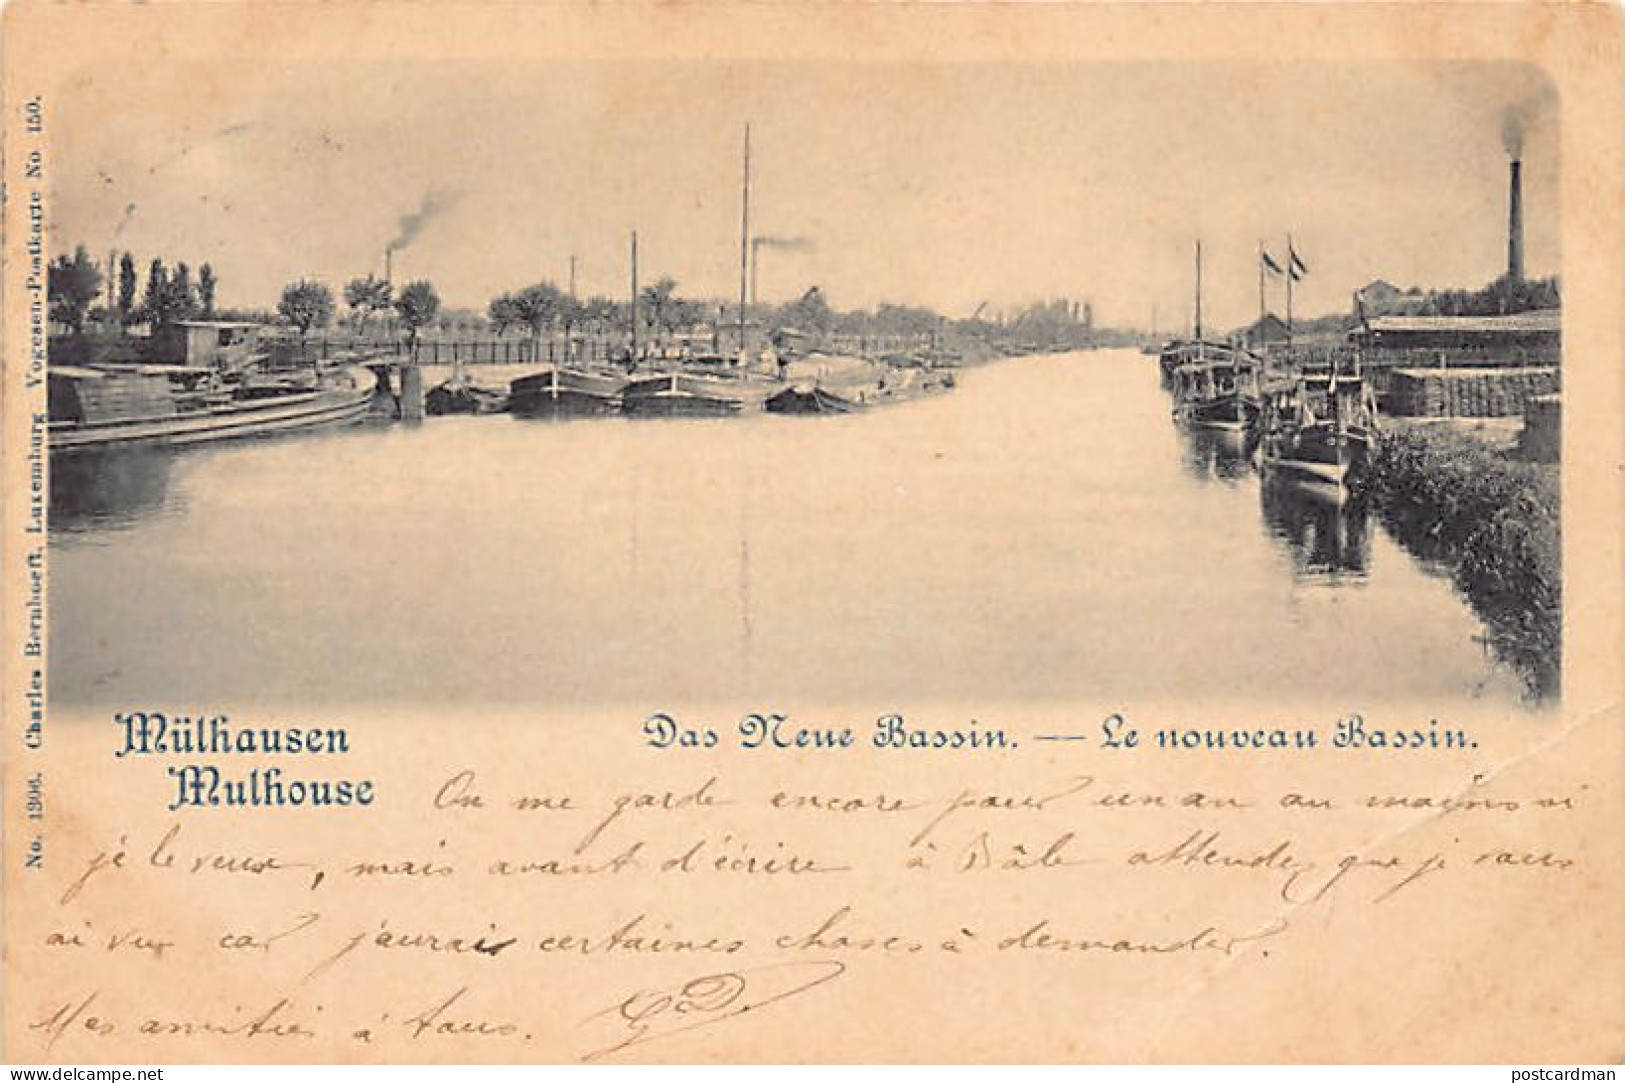 MULHOUSE - Le Nouveau Bassin - Mulhausen Dans Neue Bassin - Ed. Charles Bernhoeft Luxemburg - Mulhouse